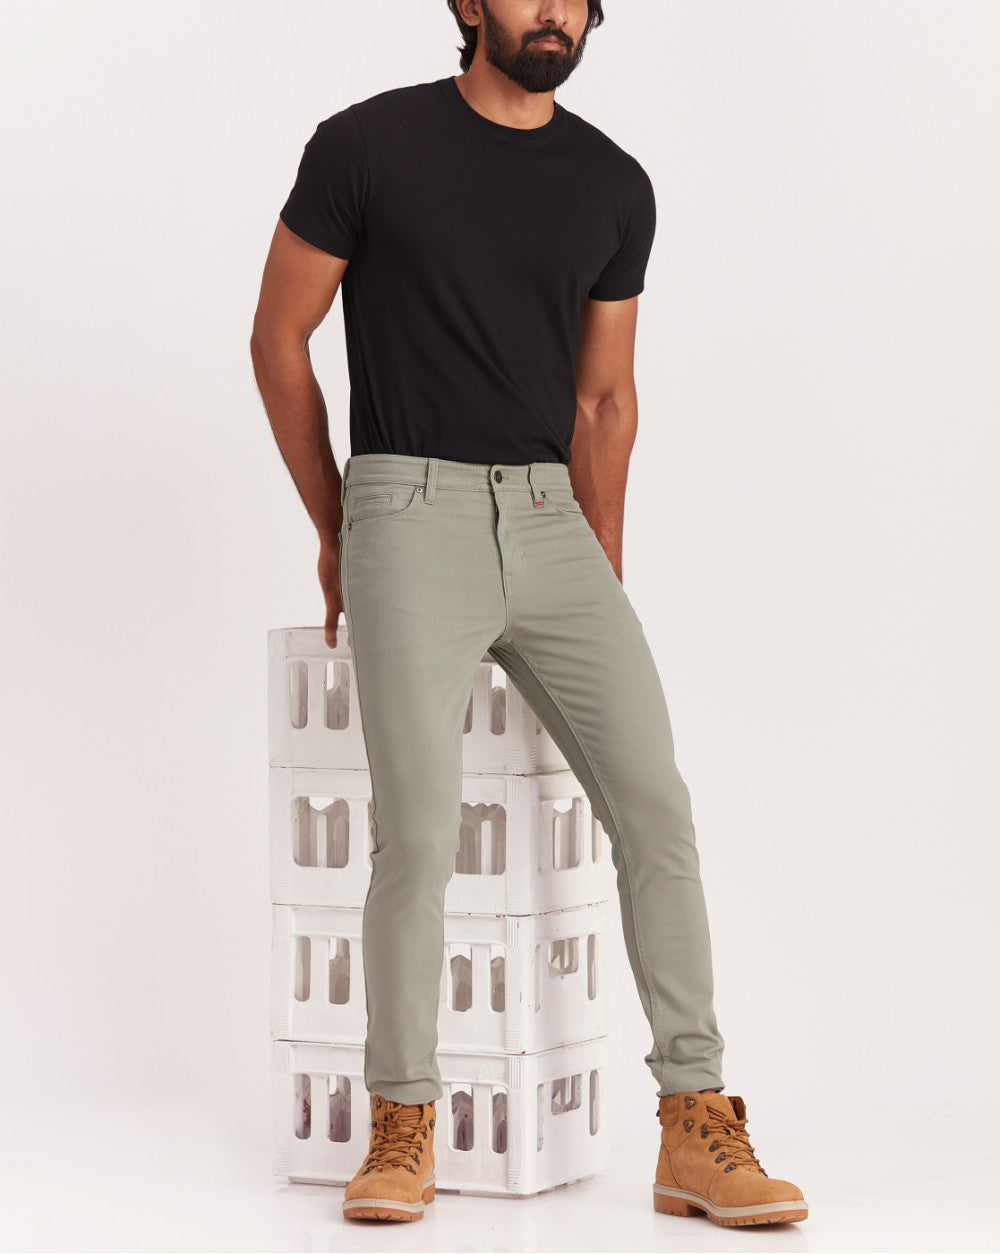 Skinny Fit Five-Pocket Luxe Pants - Pastel Sage